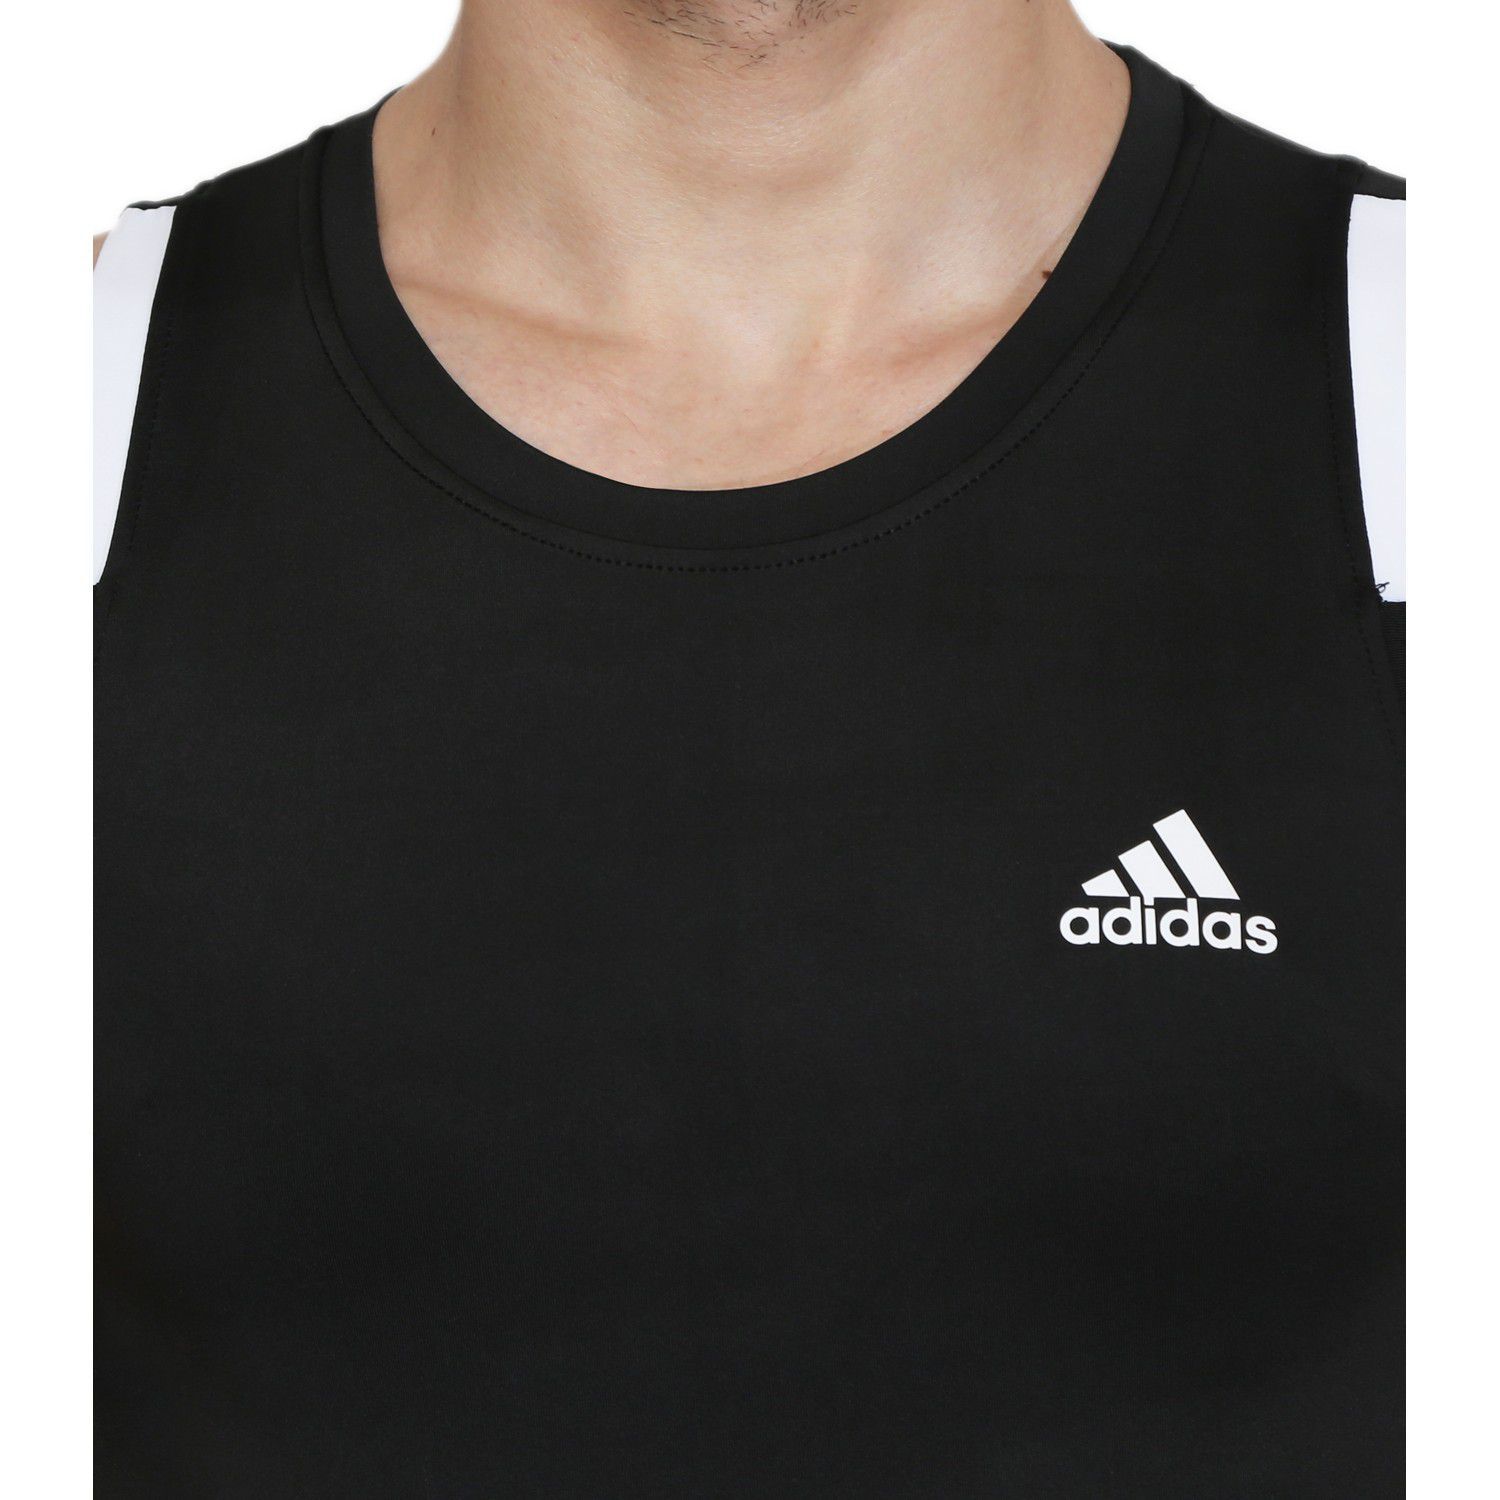 Adidas Black Sleeveless Vests - Buy Adidas Black Sleeveless Vests ...